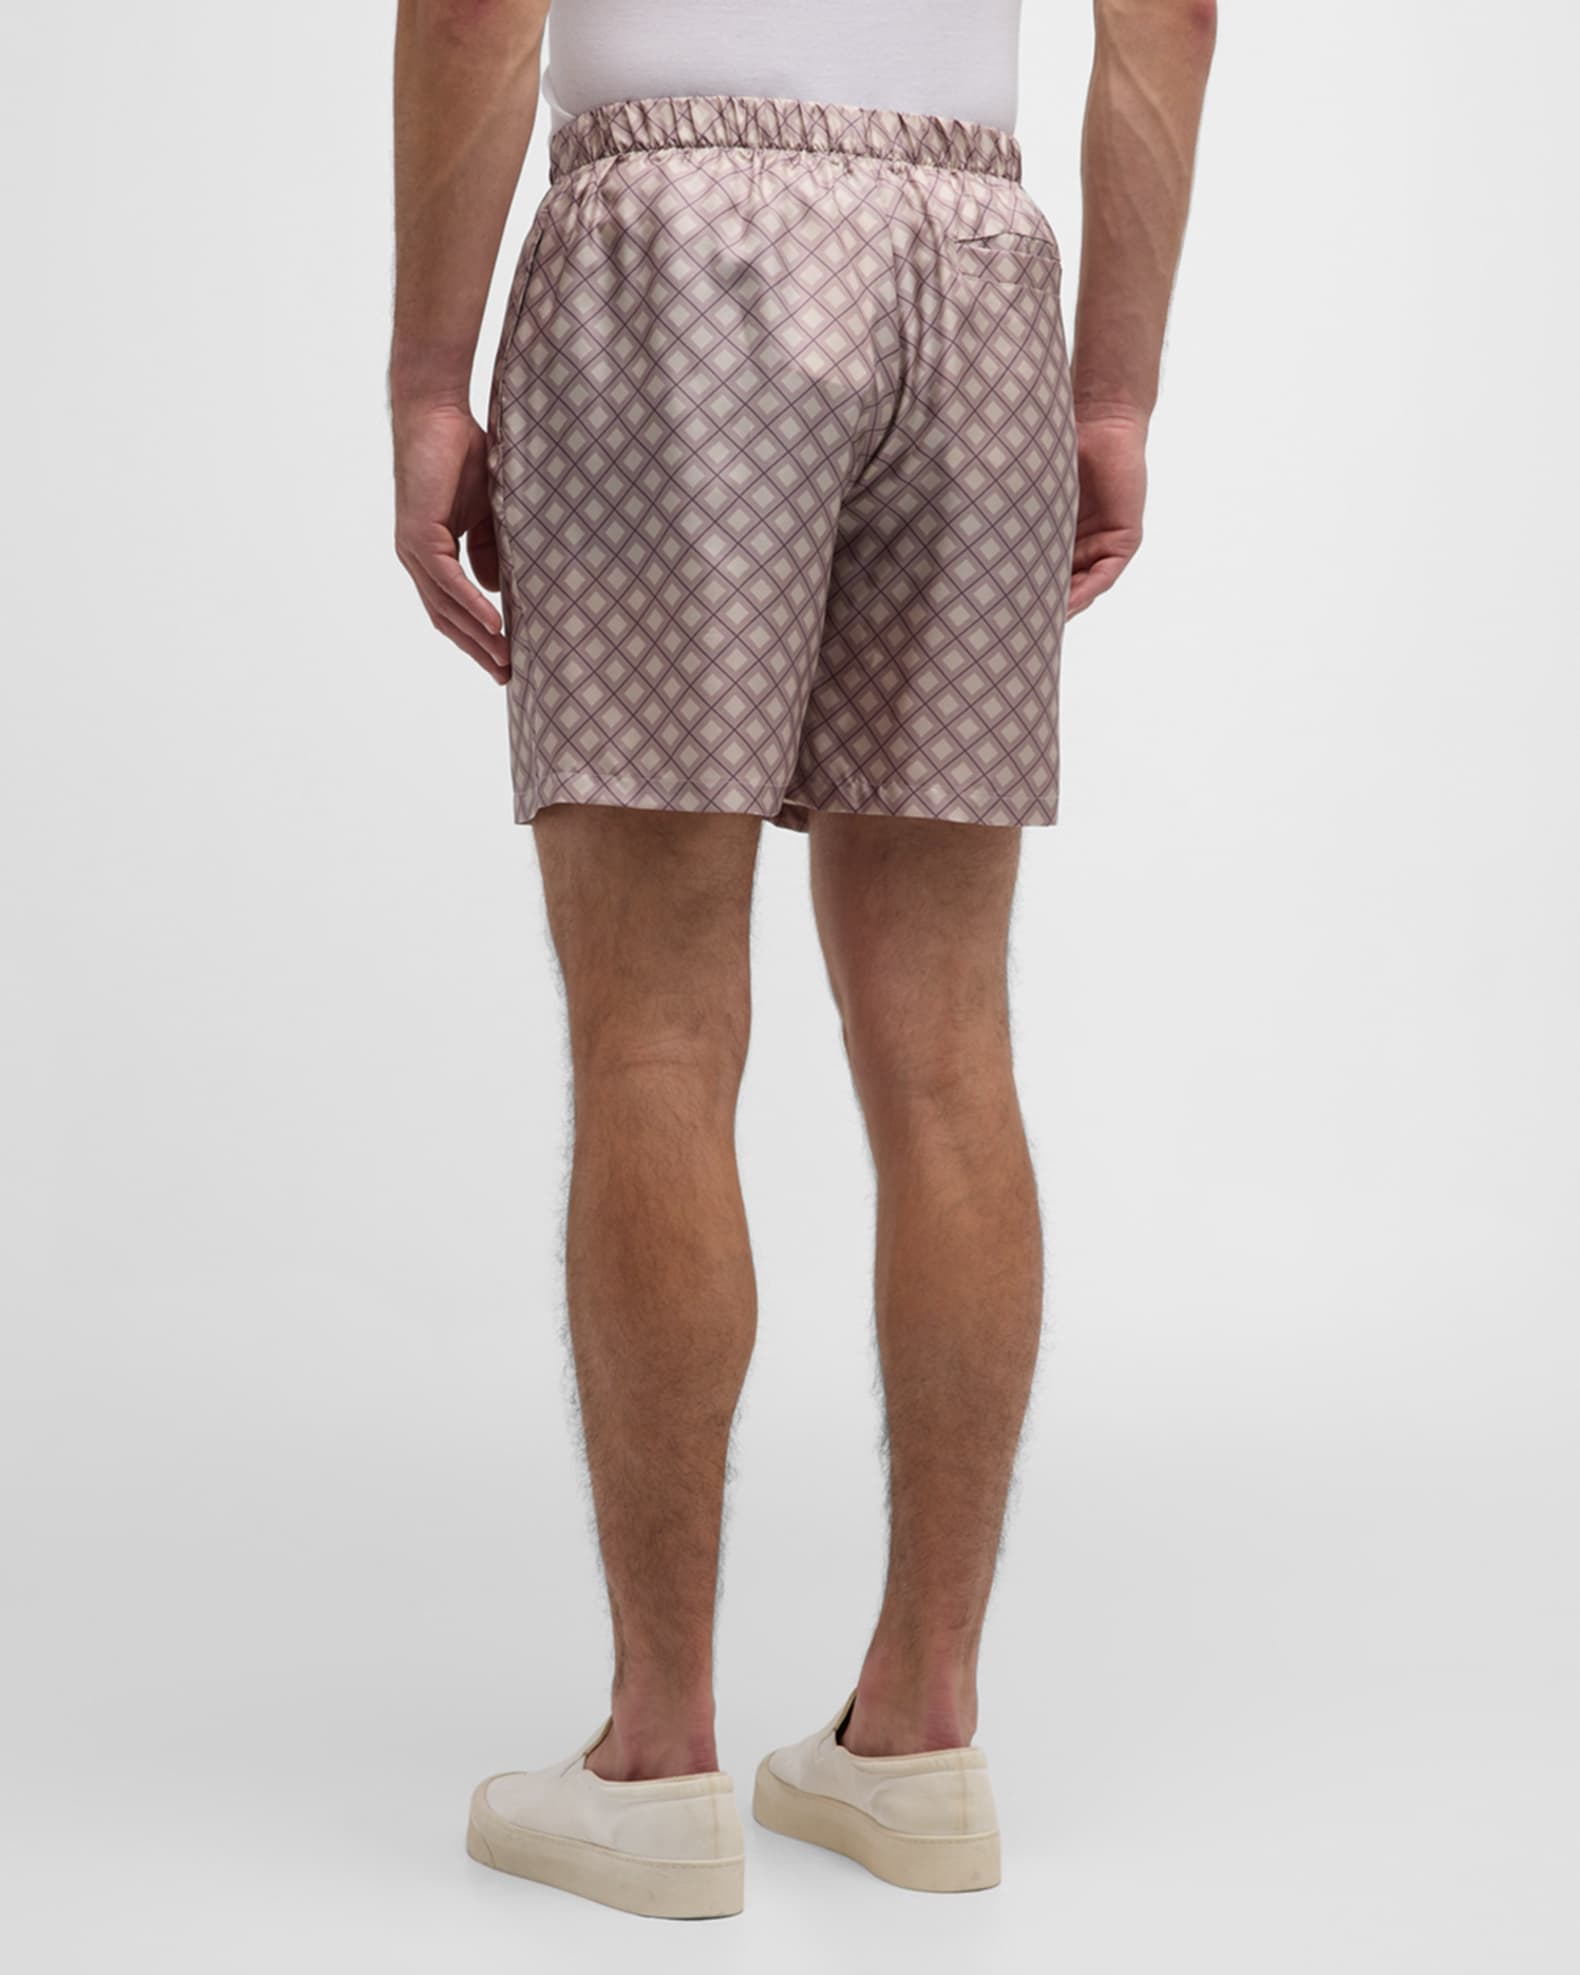 Louis Vuitton Monogram Flower Tile Bikini Bottoms Bright Red. Size 40